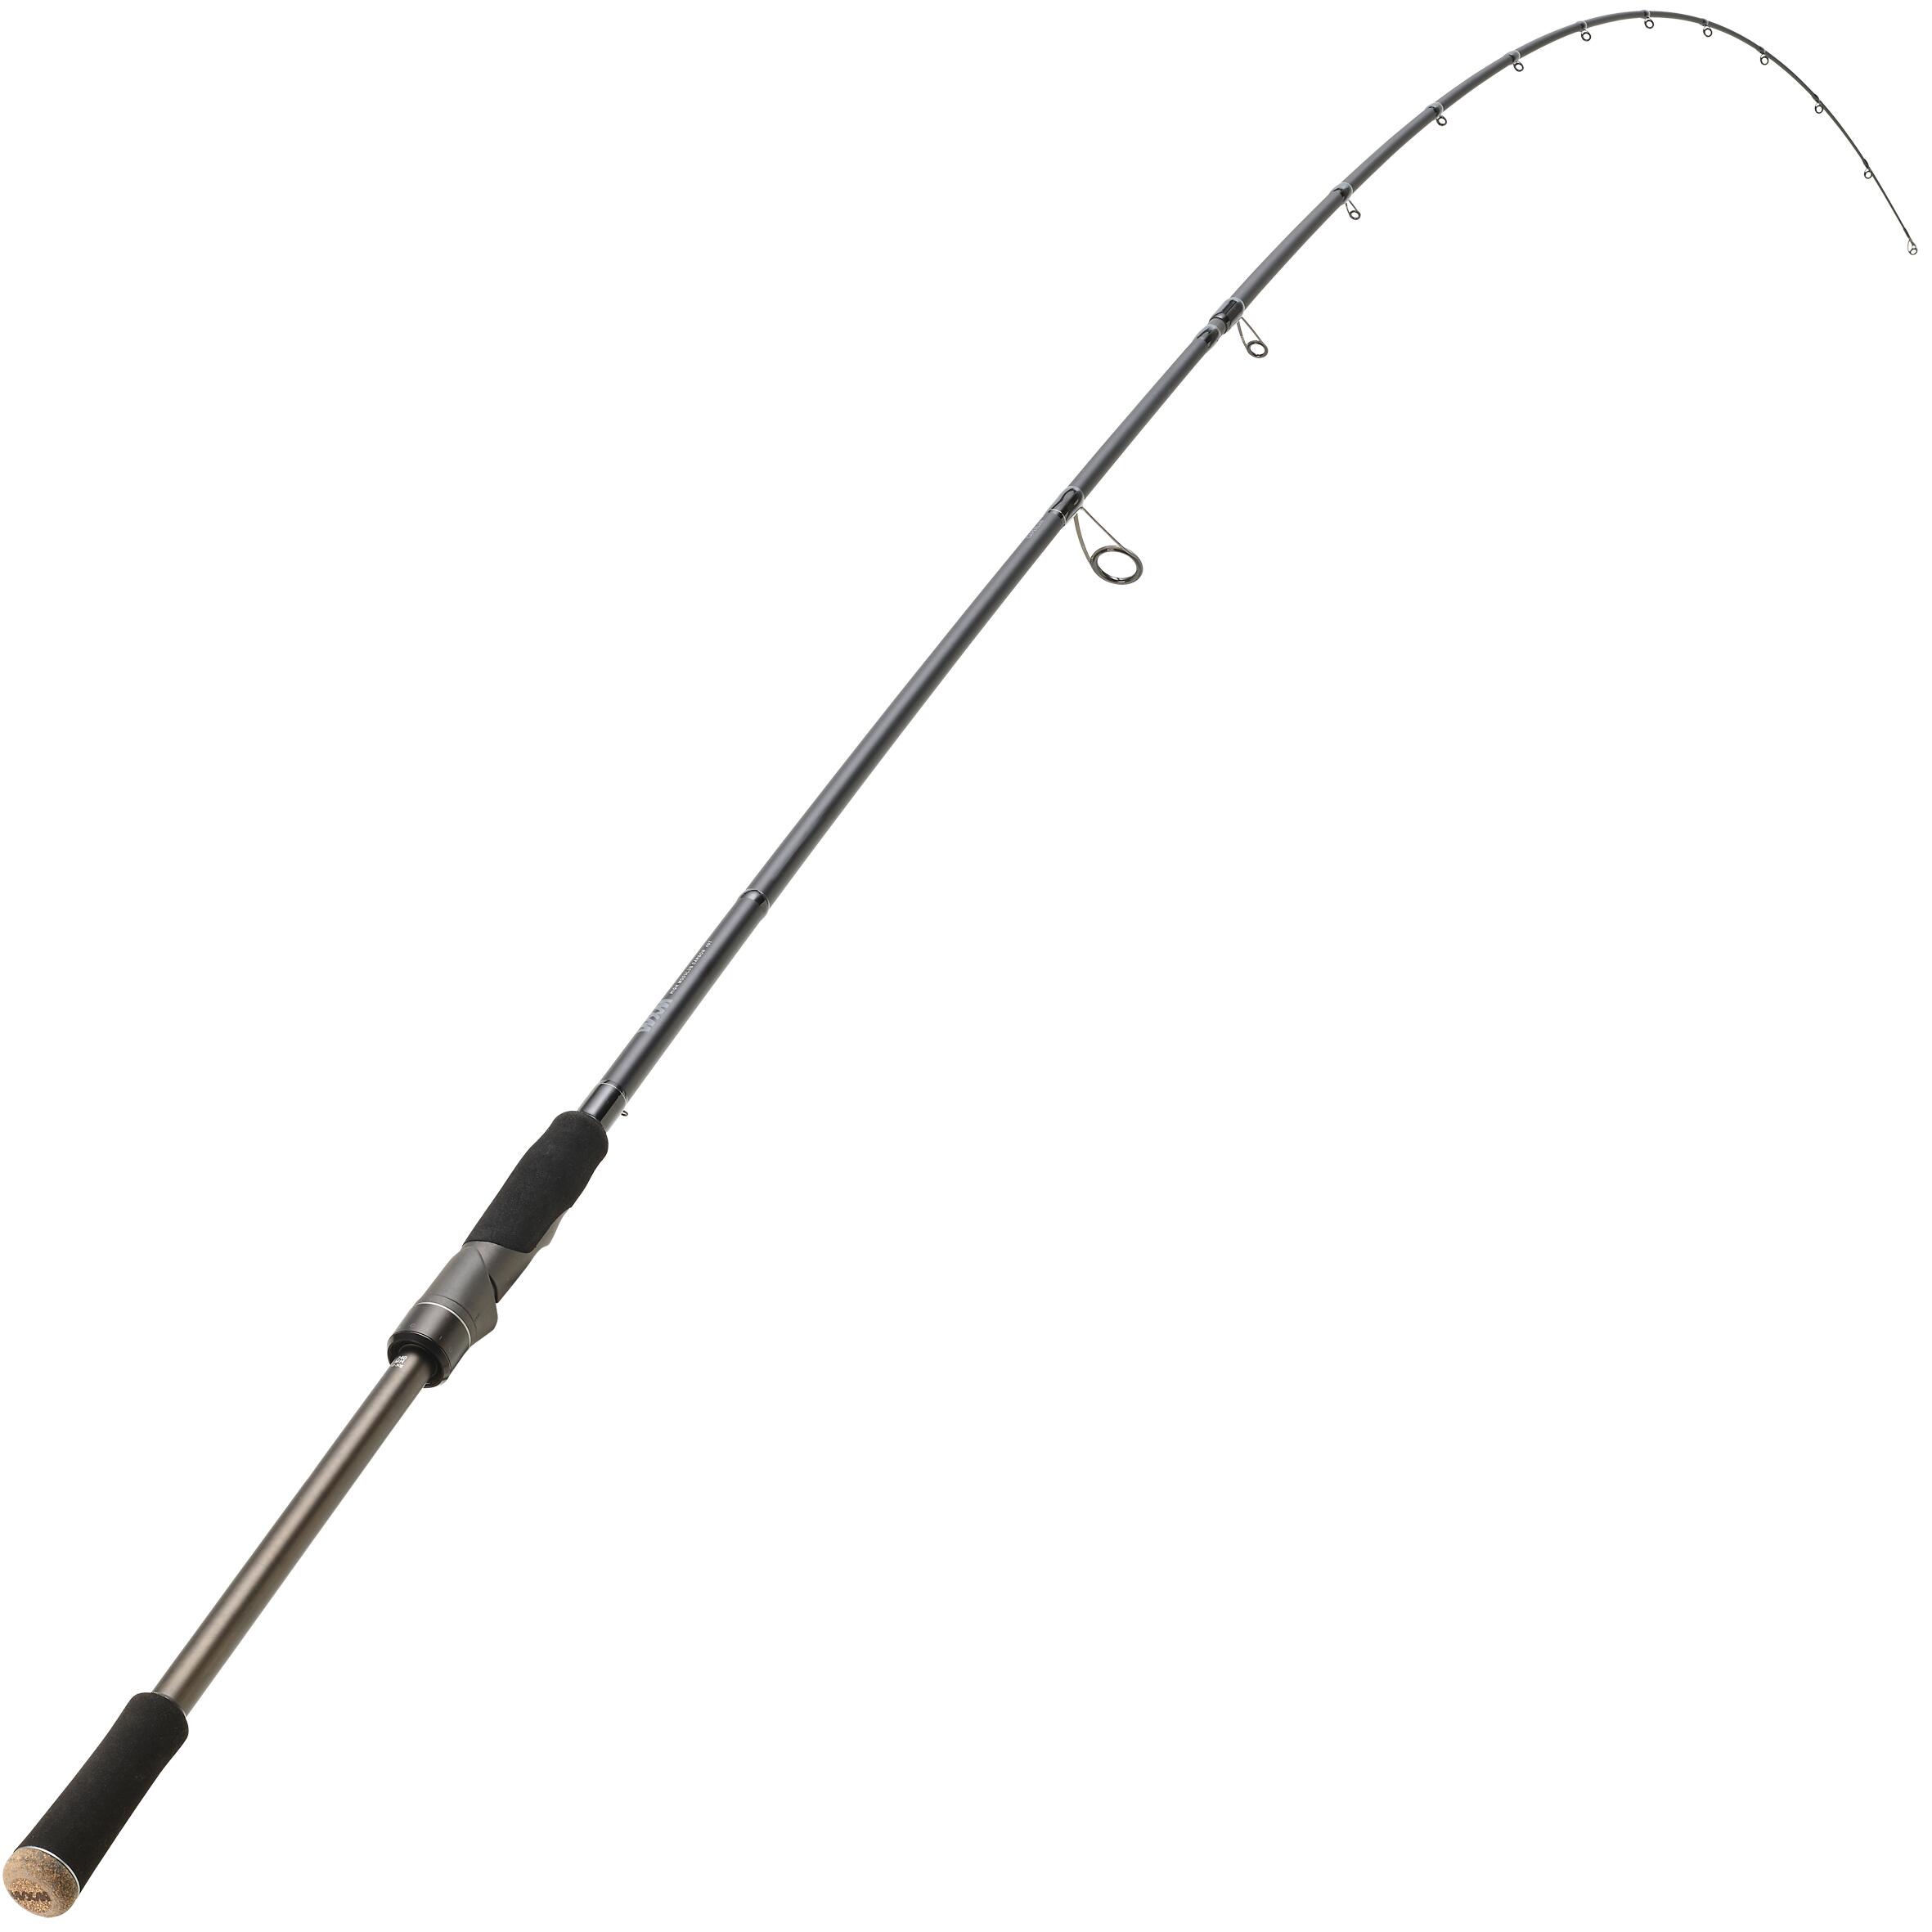 WMX-9 240 MH lure fishing rod - CAPERLAN